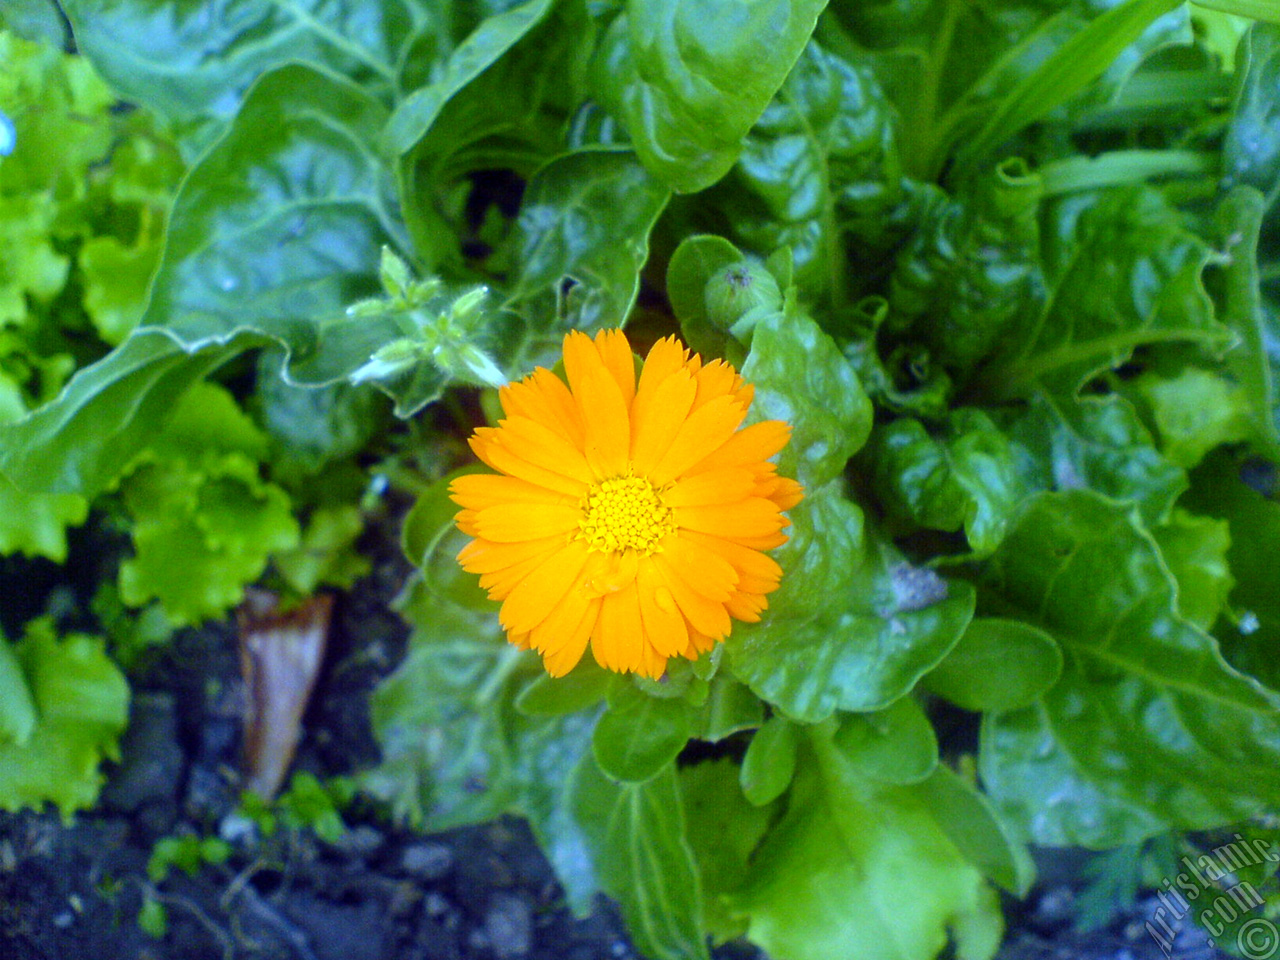 Dark orange color Pot Marigold -Scotch Marigold- flower which is similar to yellow daisy.
